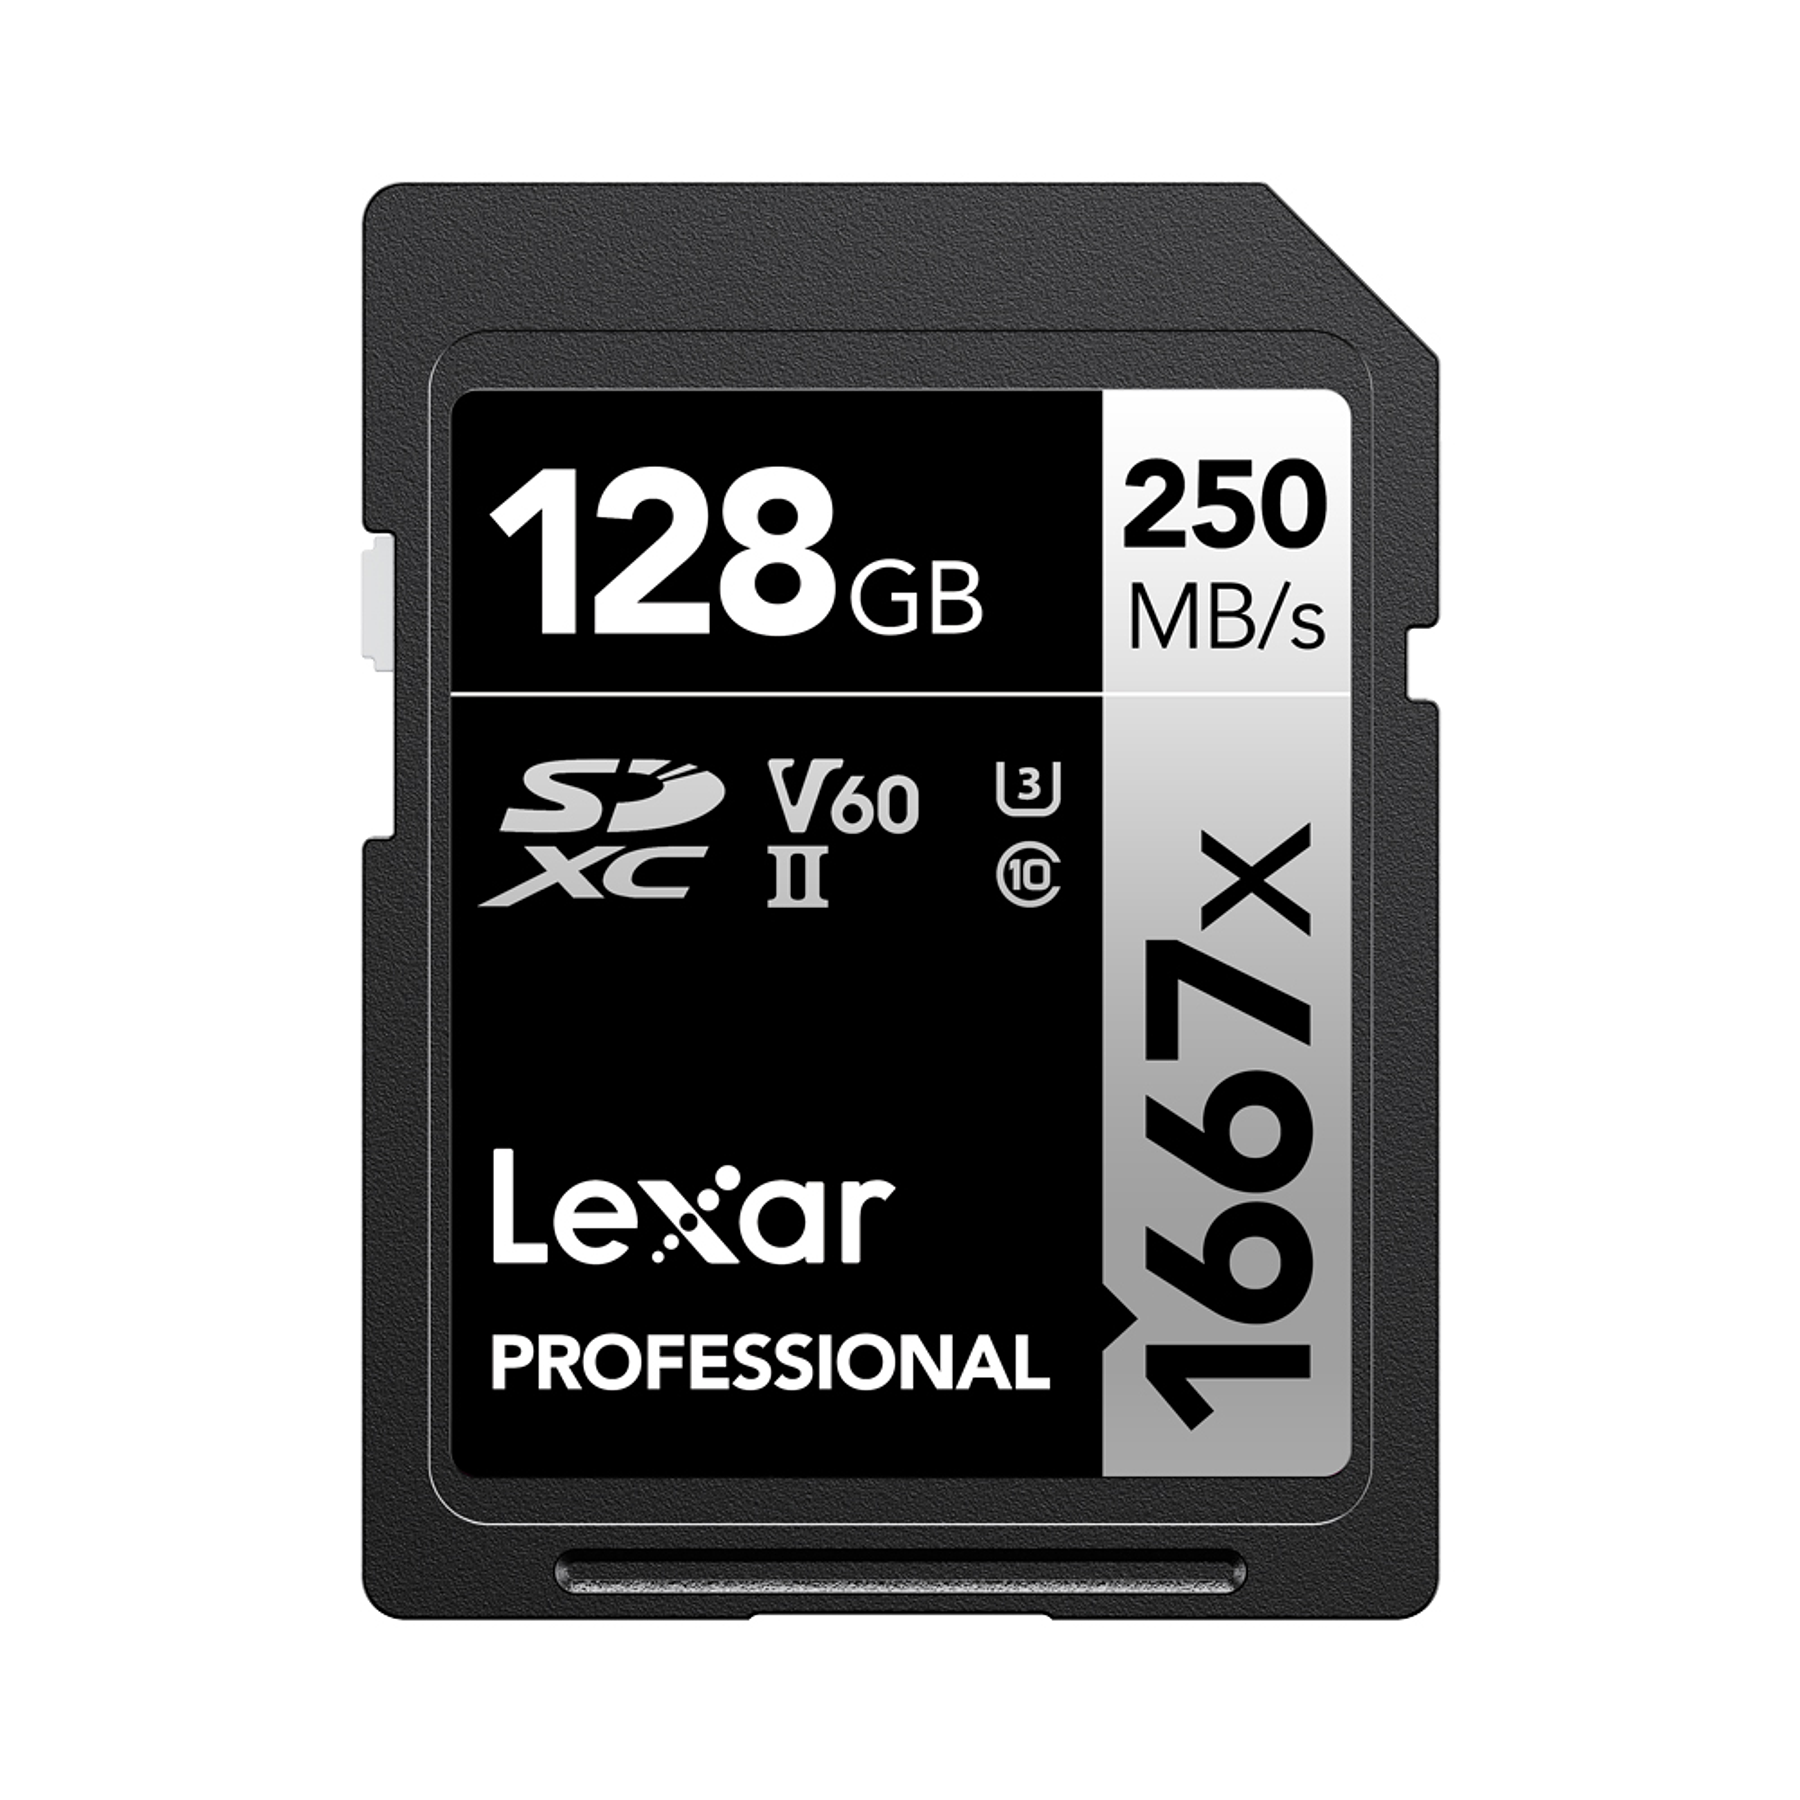 Lexar 128GB SDXC UHS-II 1667X V60 250 MB/S 